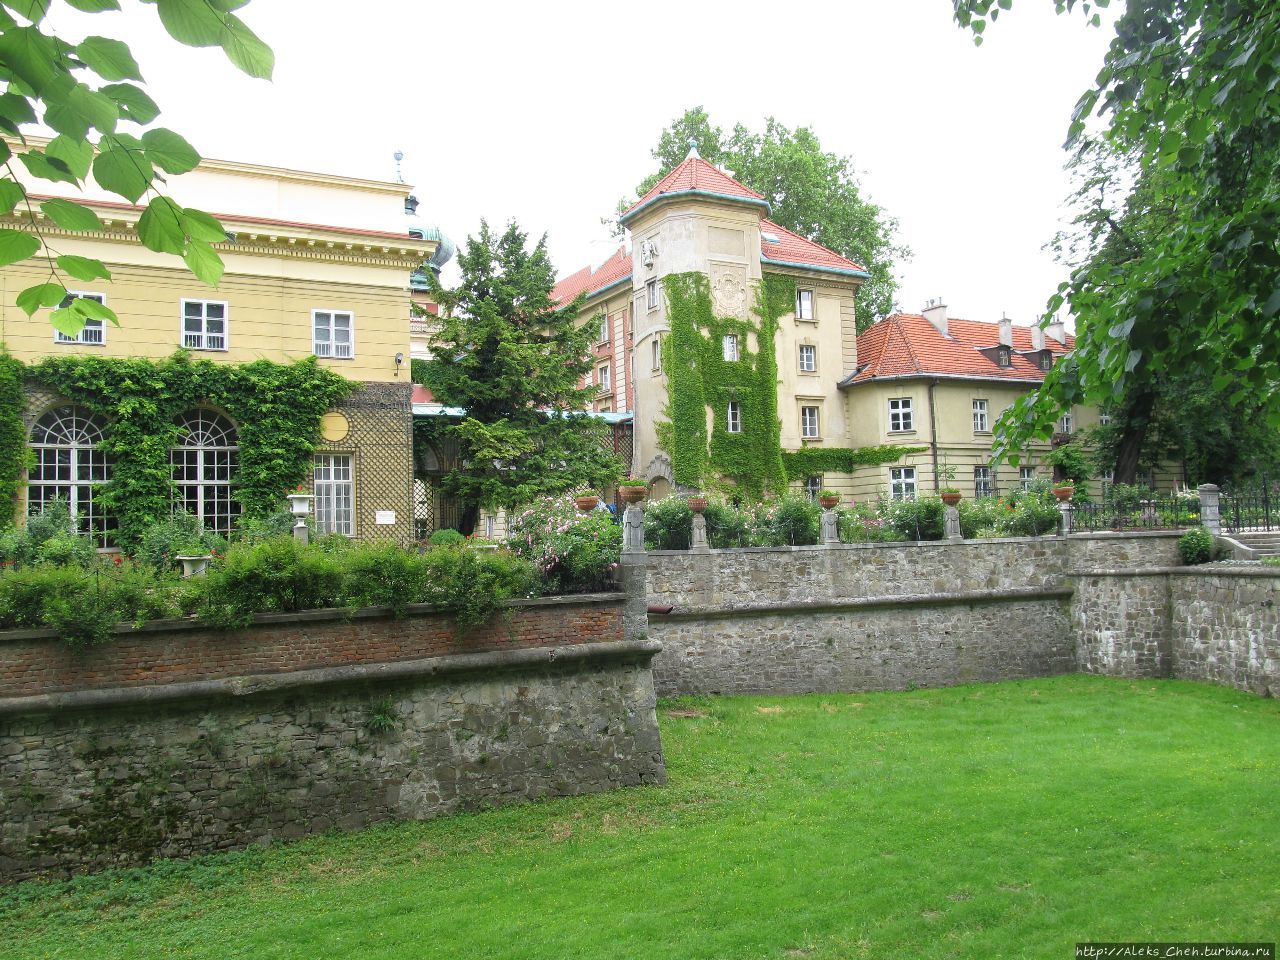 Ланьцут — город и замок Ланьцут, Польша